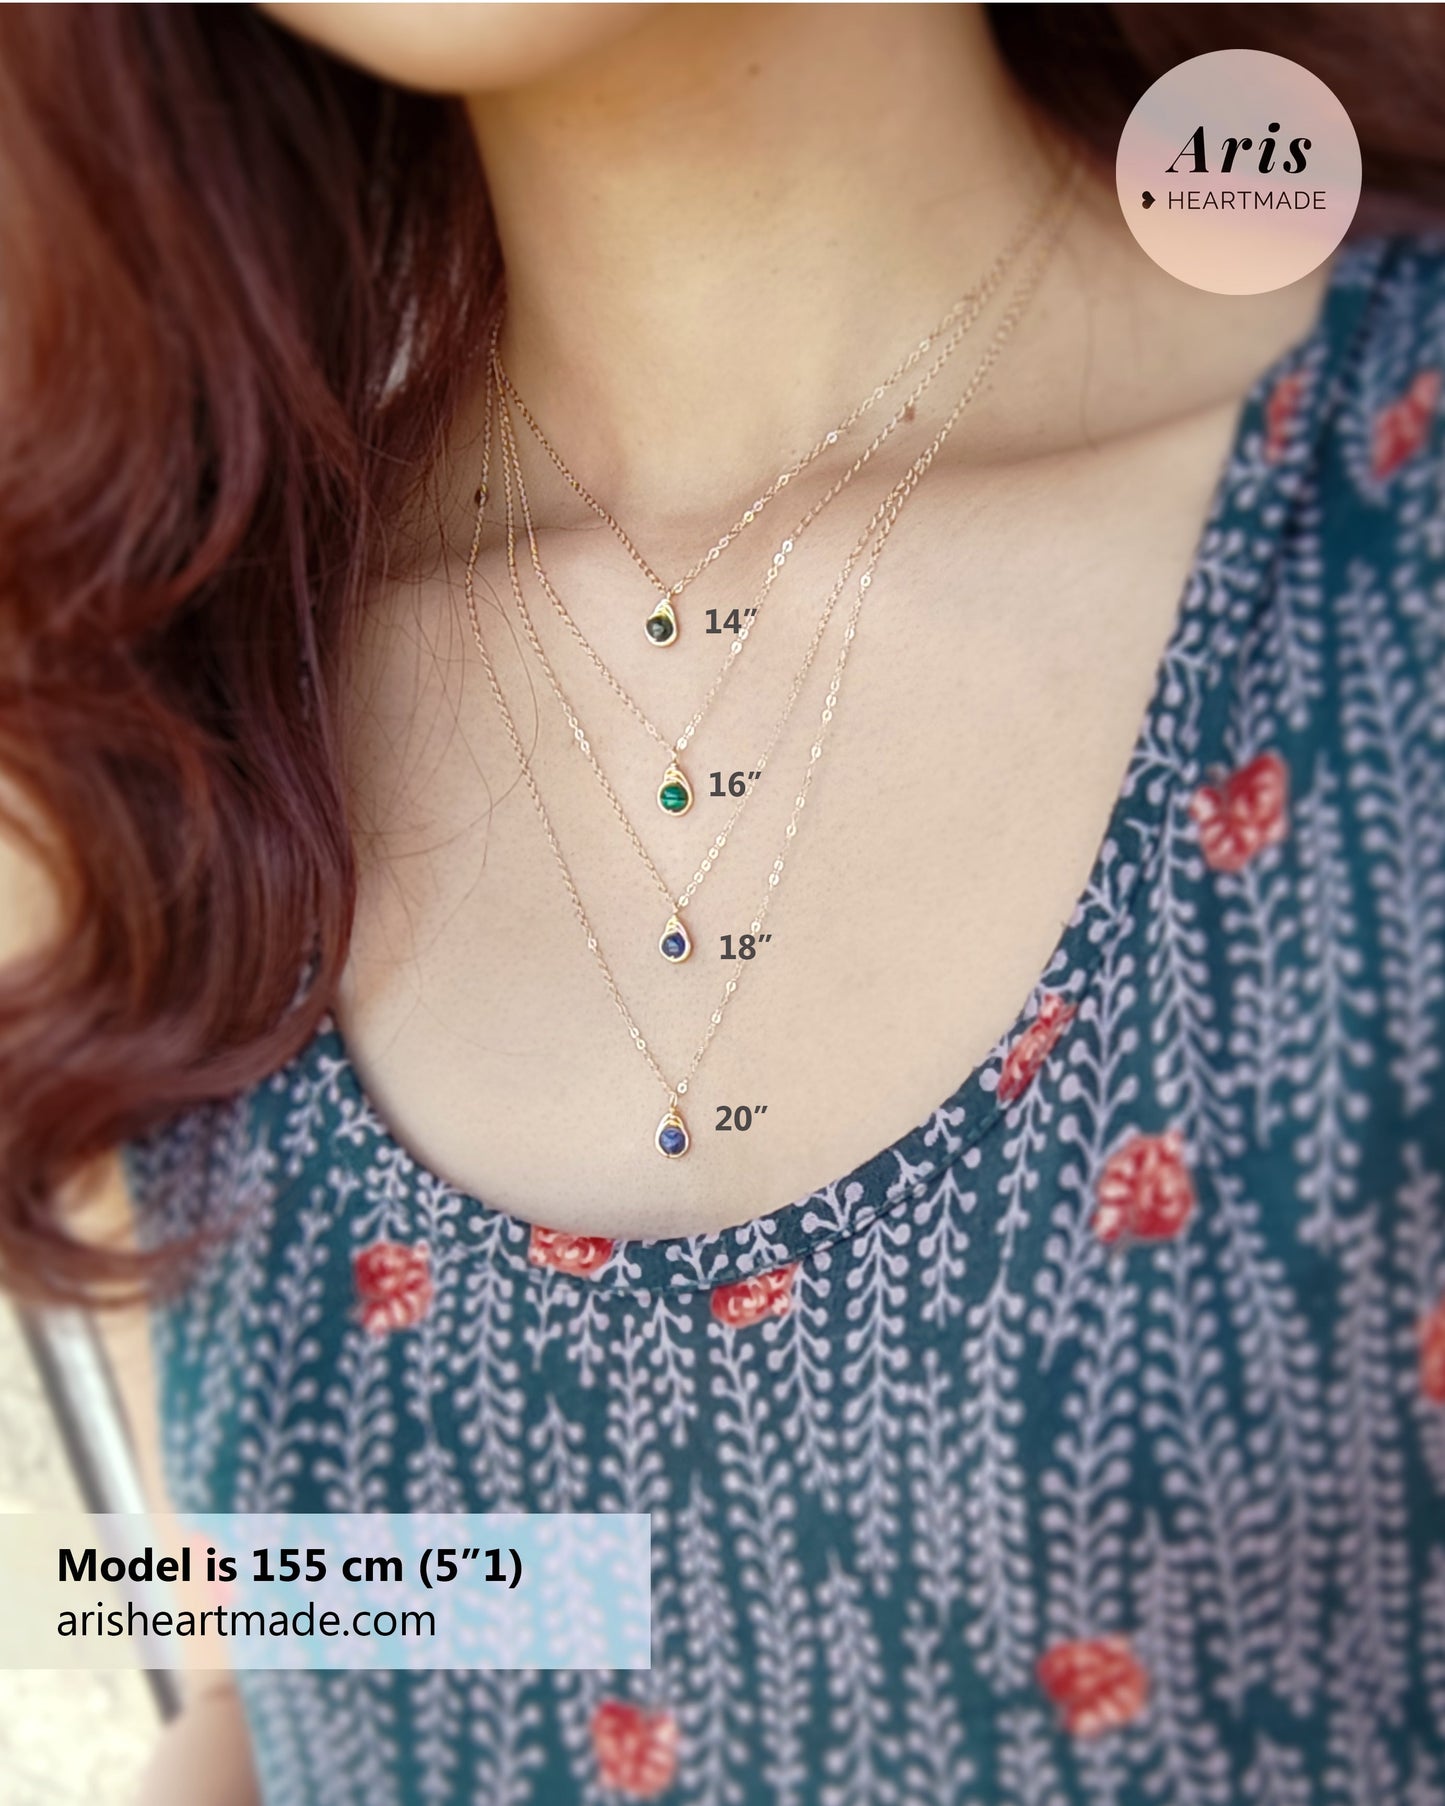 Minimalist Pearl Bar Necklace